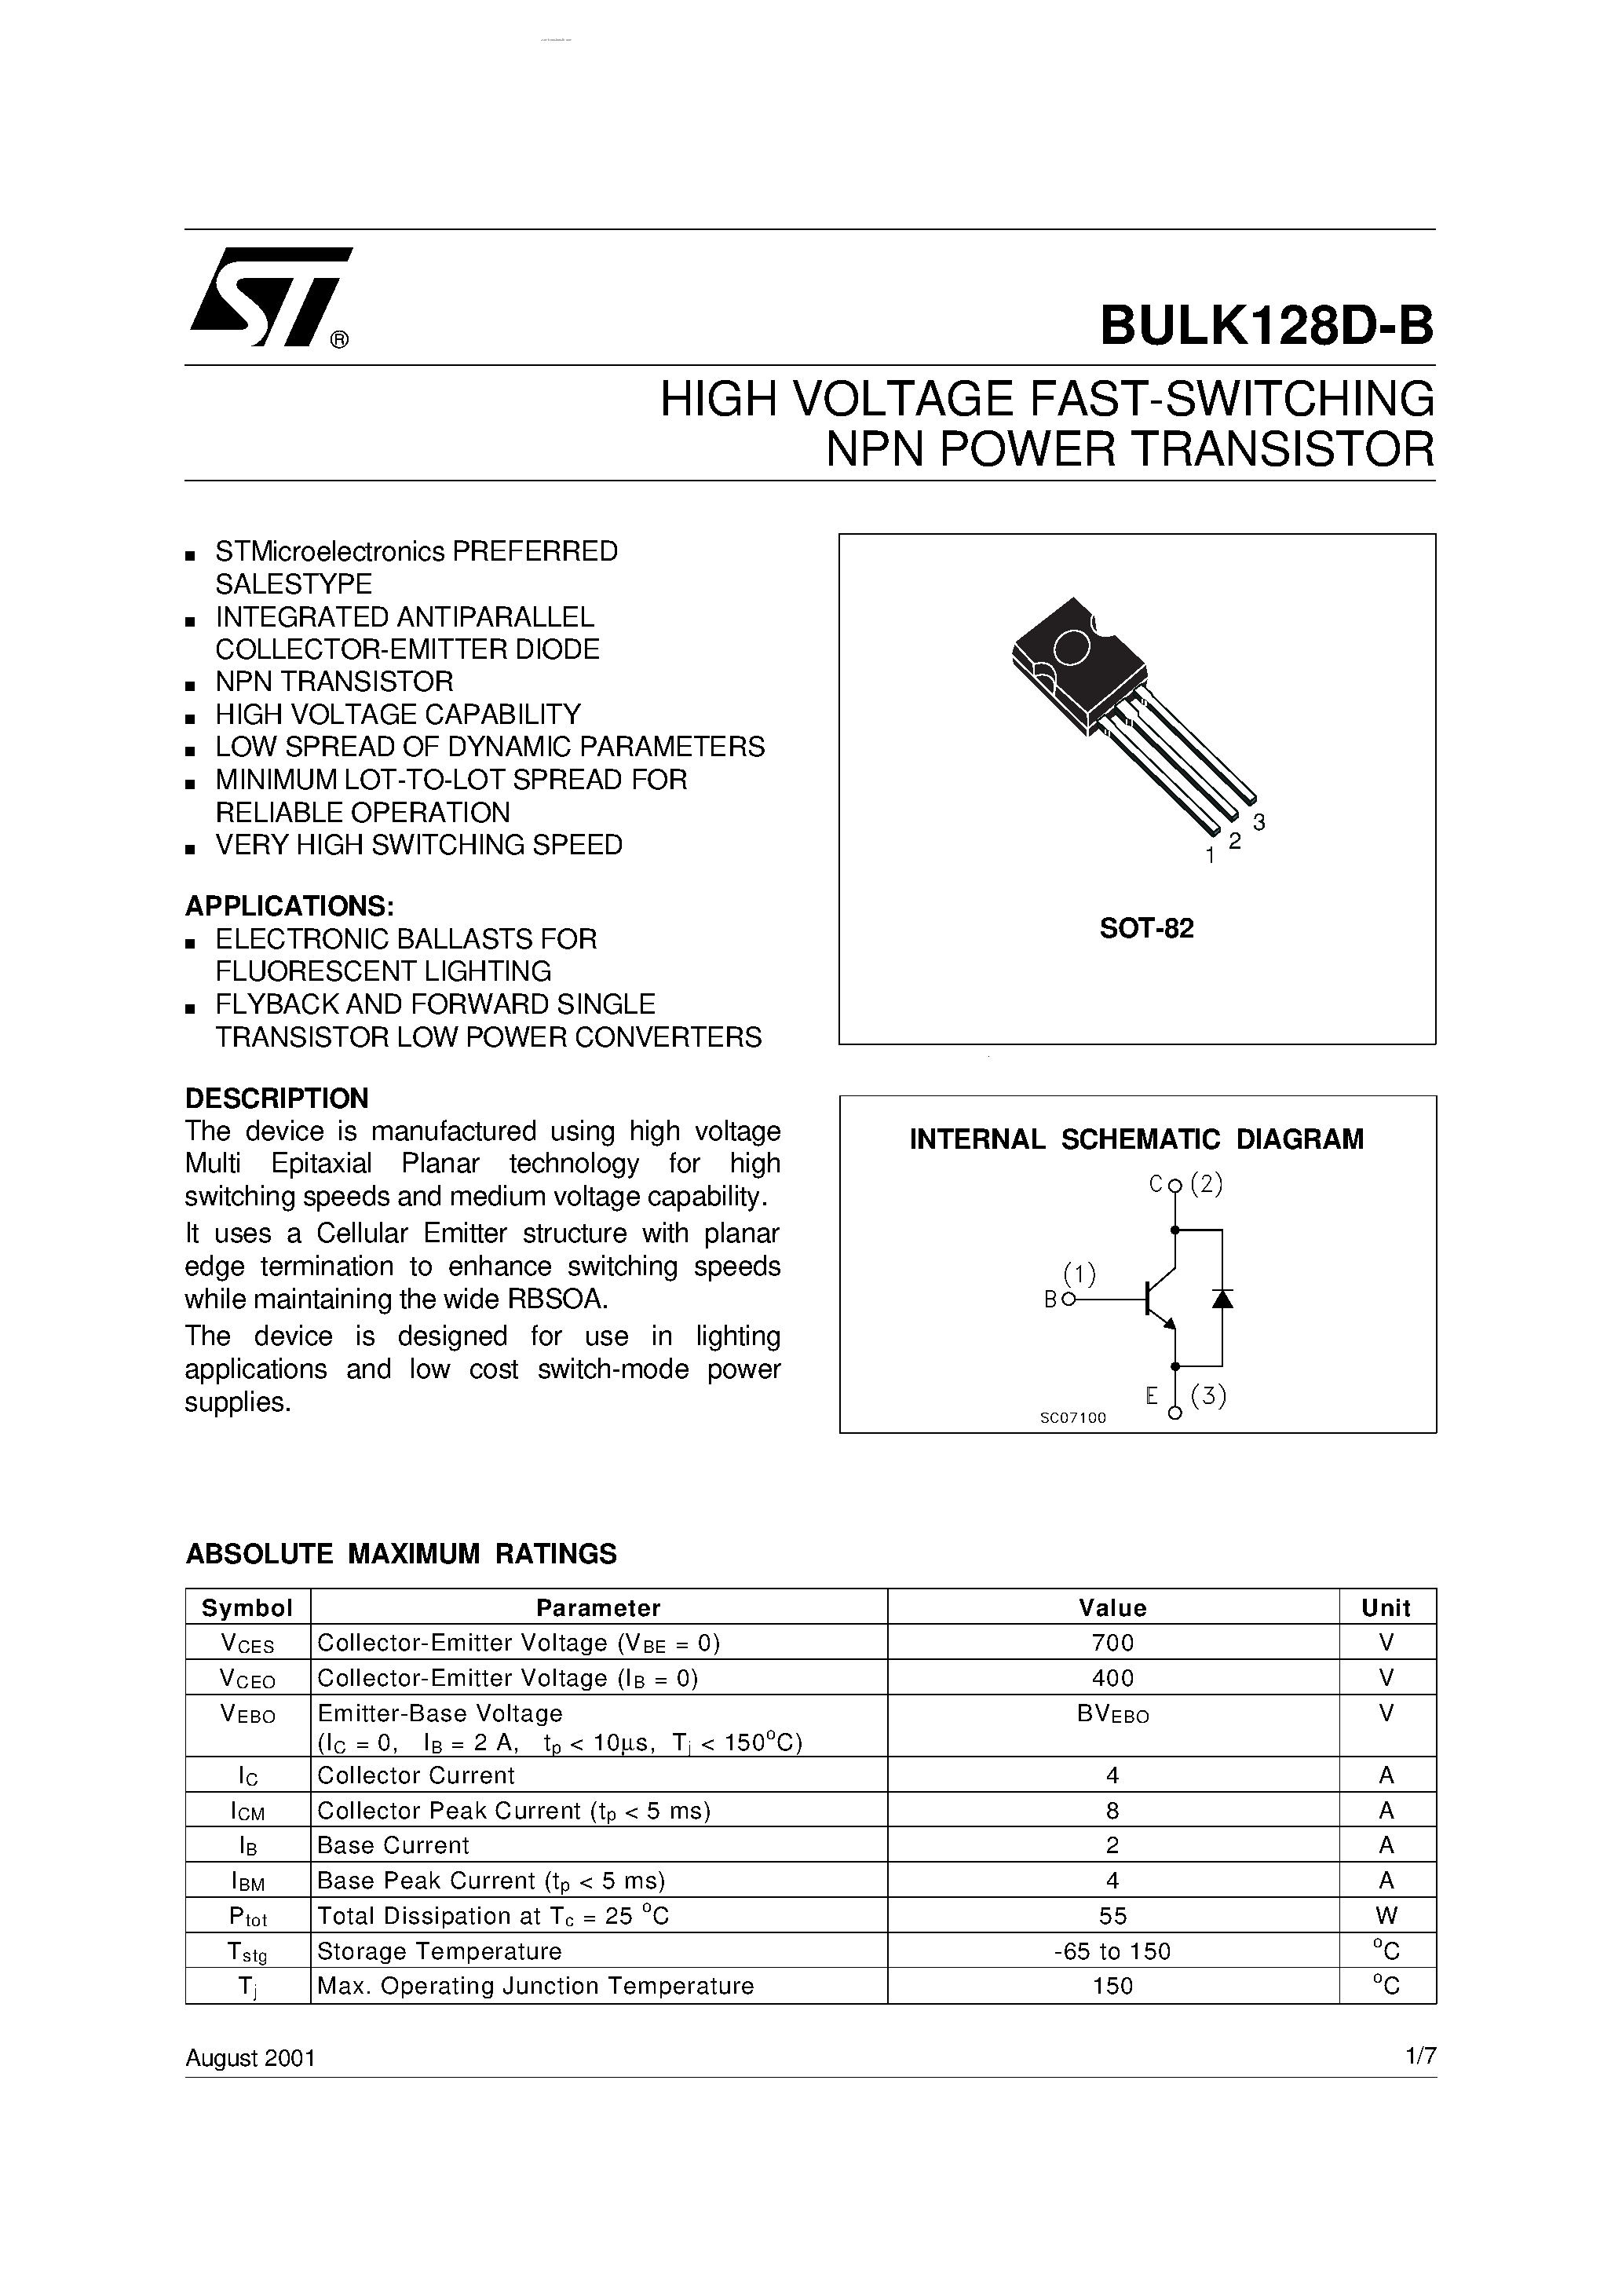 Datasheet BULK128D-B - HIGH VOLTAGE FAST-SWITCHING NPN POWER TRANSISTOR page 1